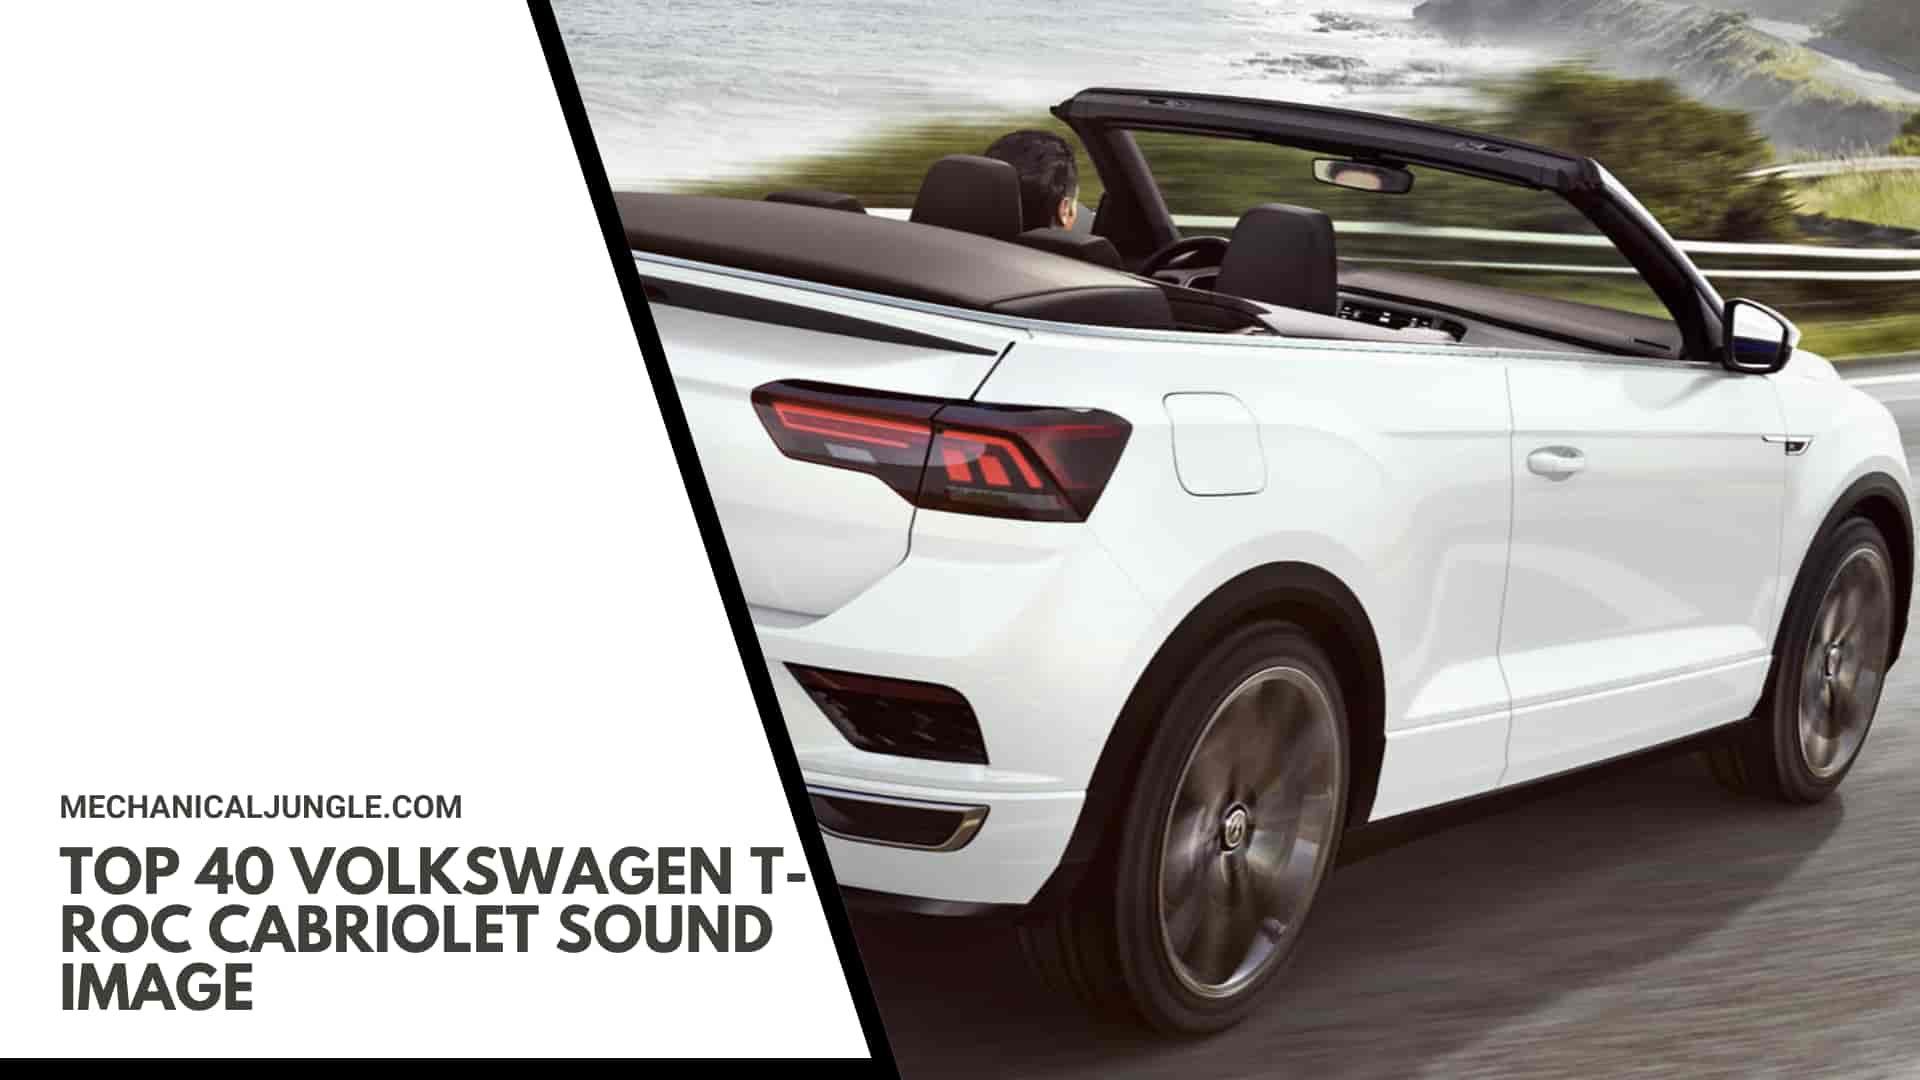 Top 40 Volkswagen T-Roc Cabriolet Sound Image